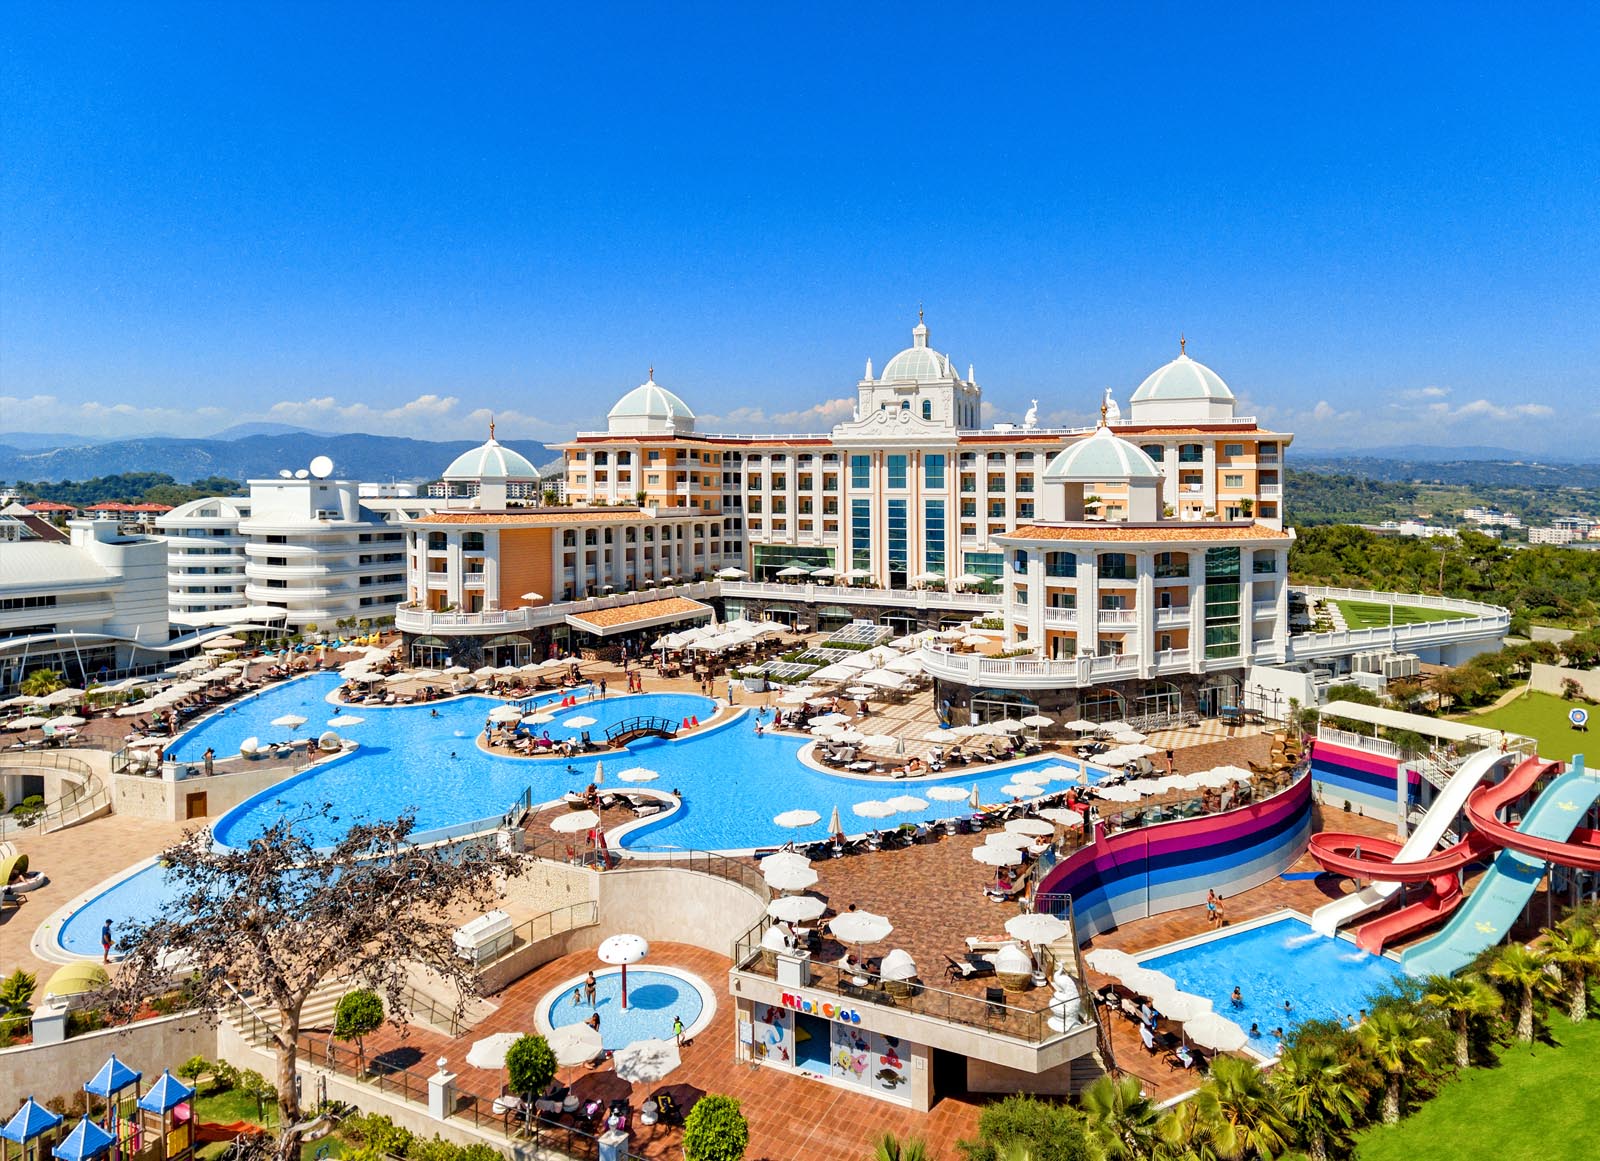 Litore Resort Hotel Spa